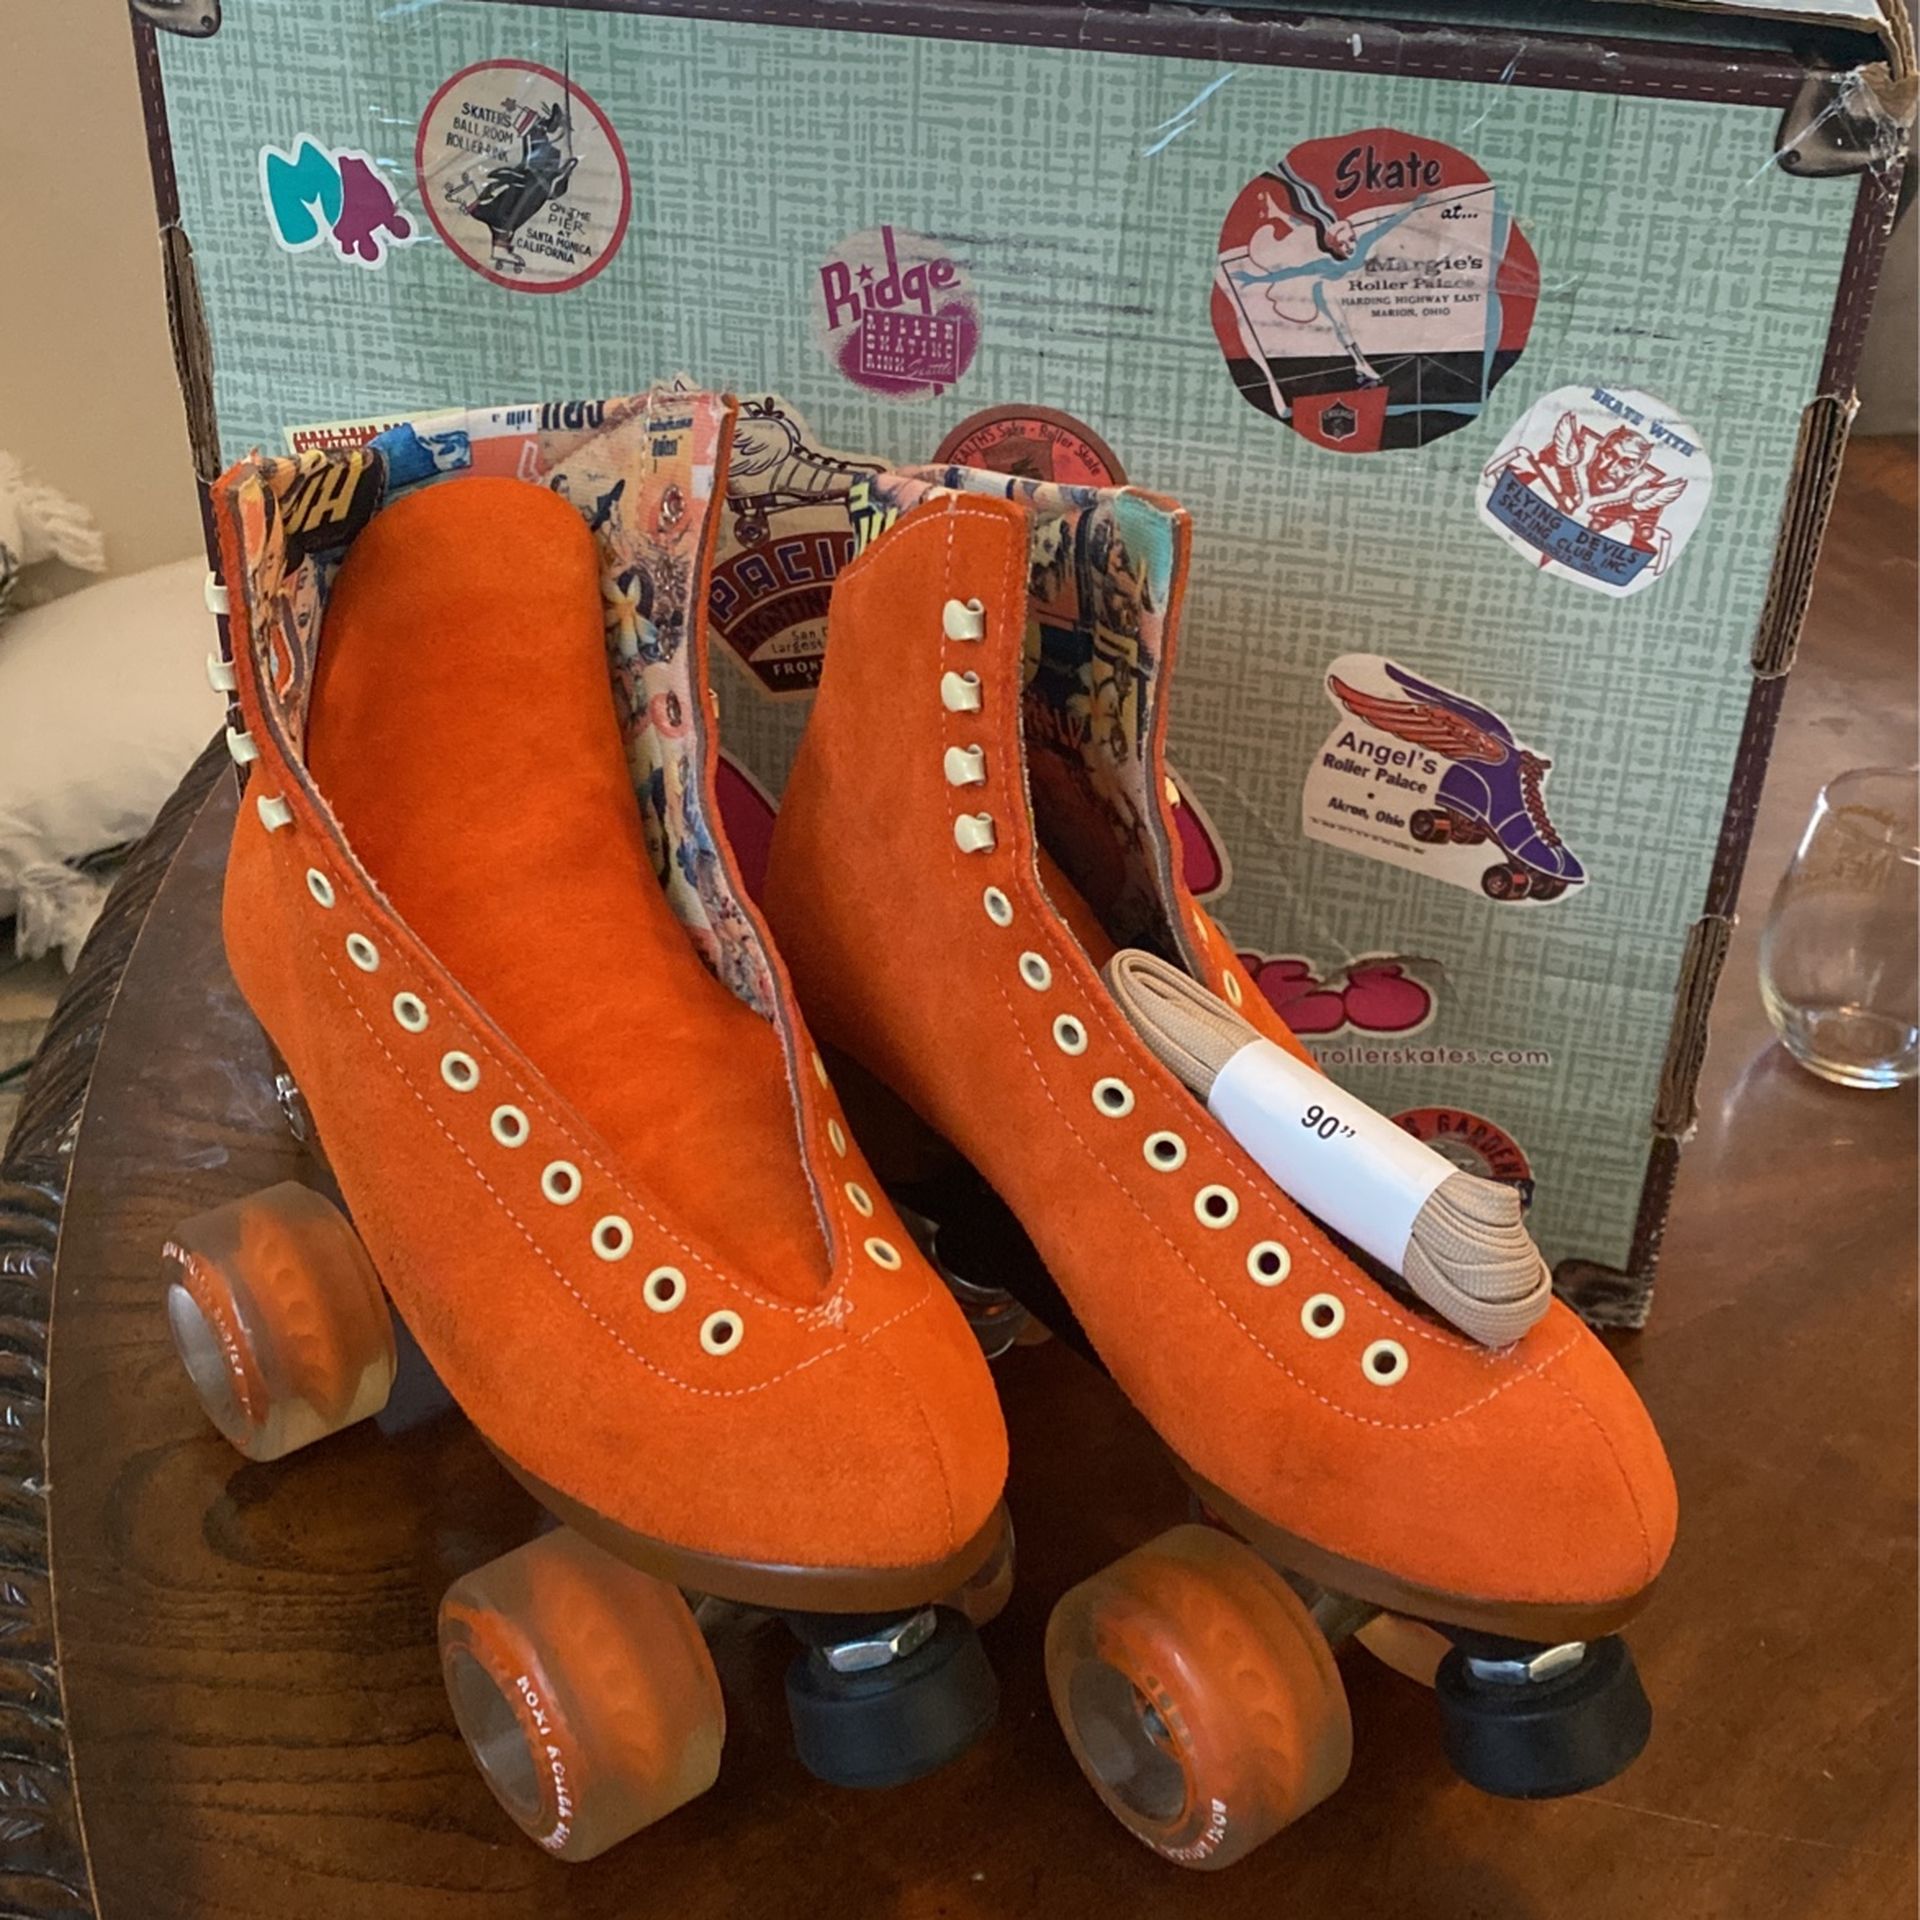 Moxi Lolly Roller skates-size 7 in clementine orange